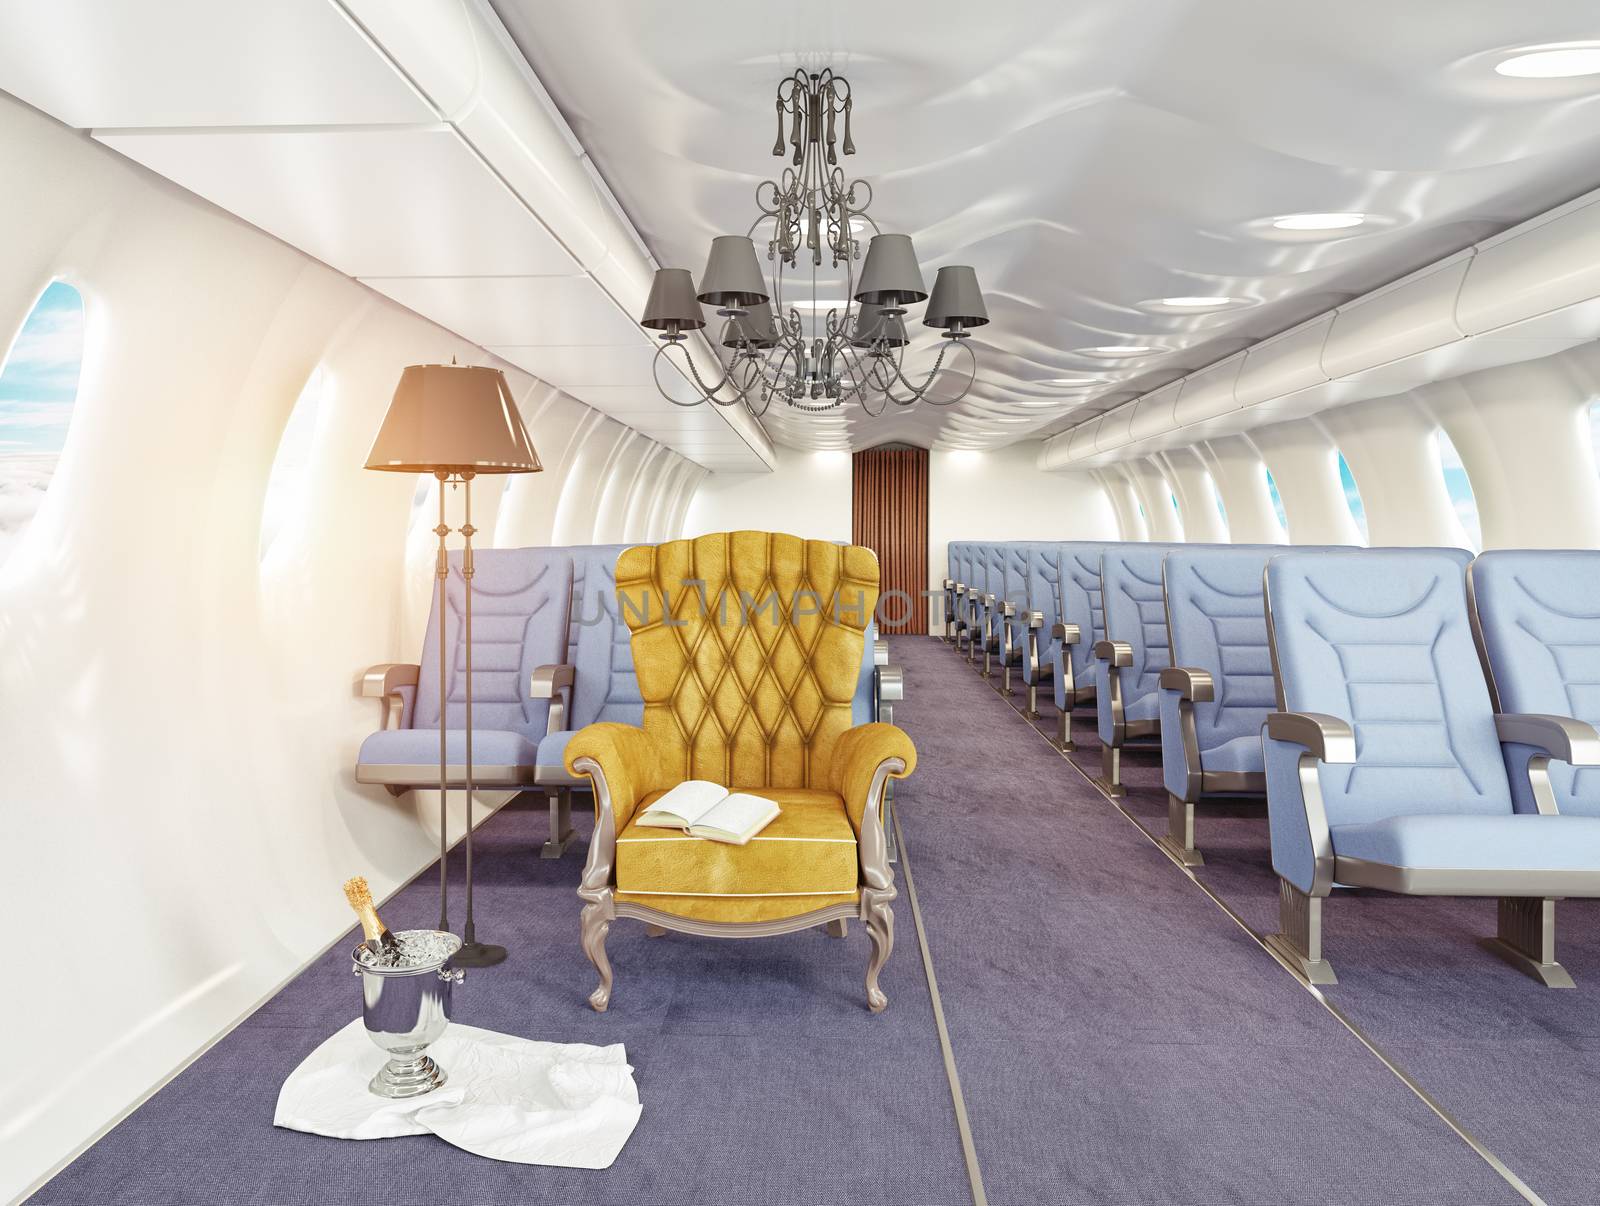  luxury armchair in airplane cabin. 3d creativity concept